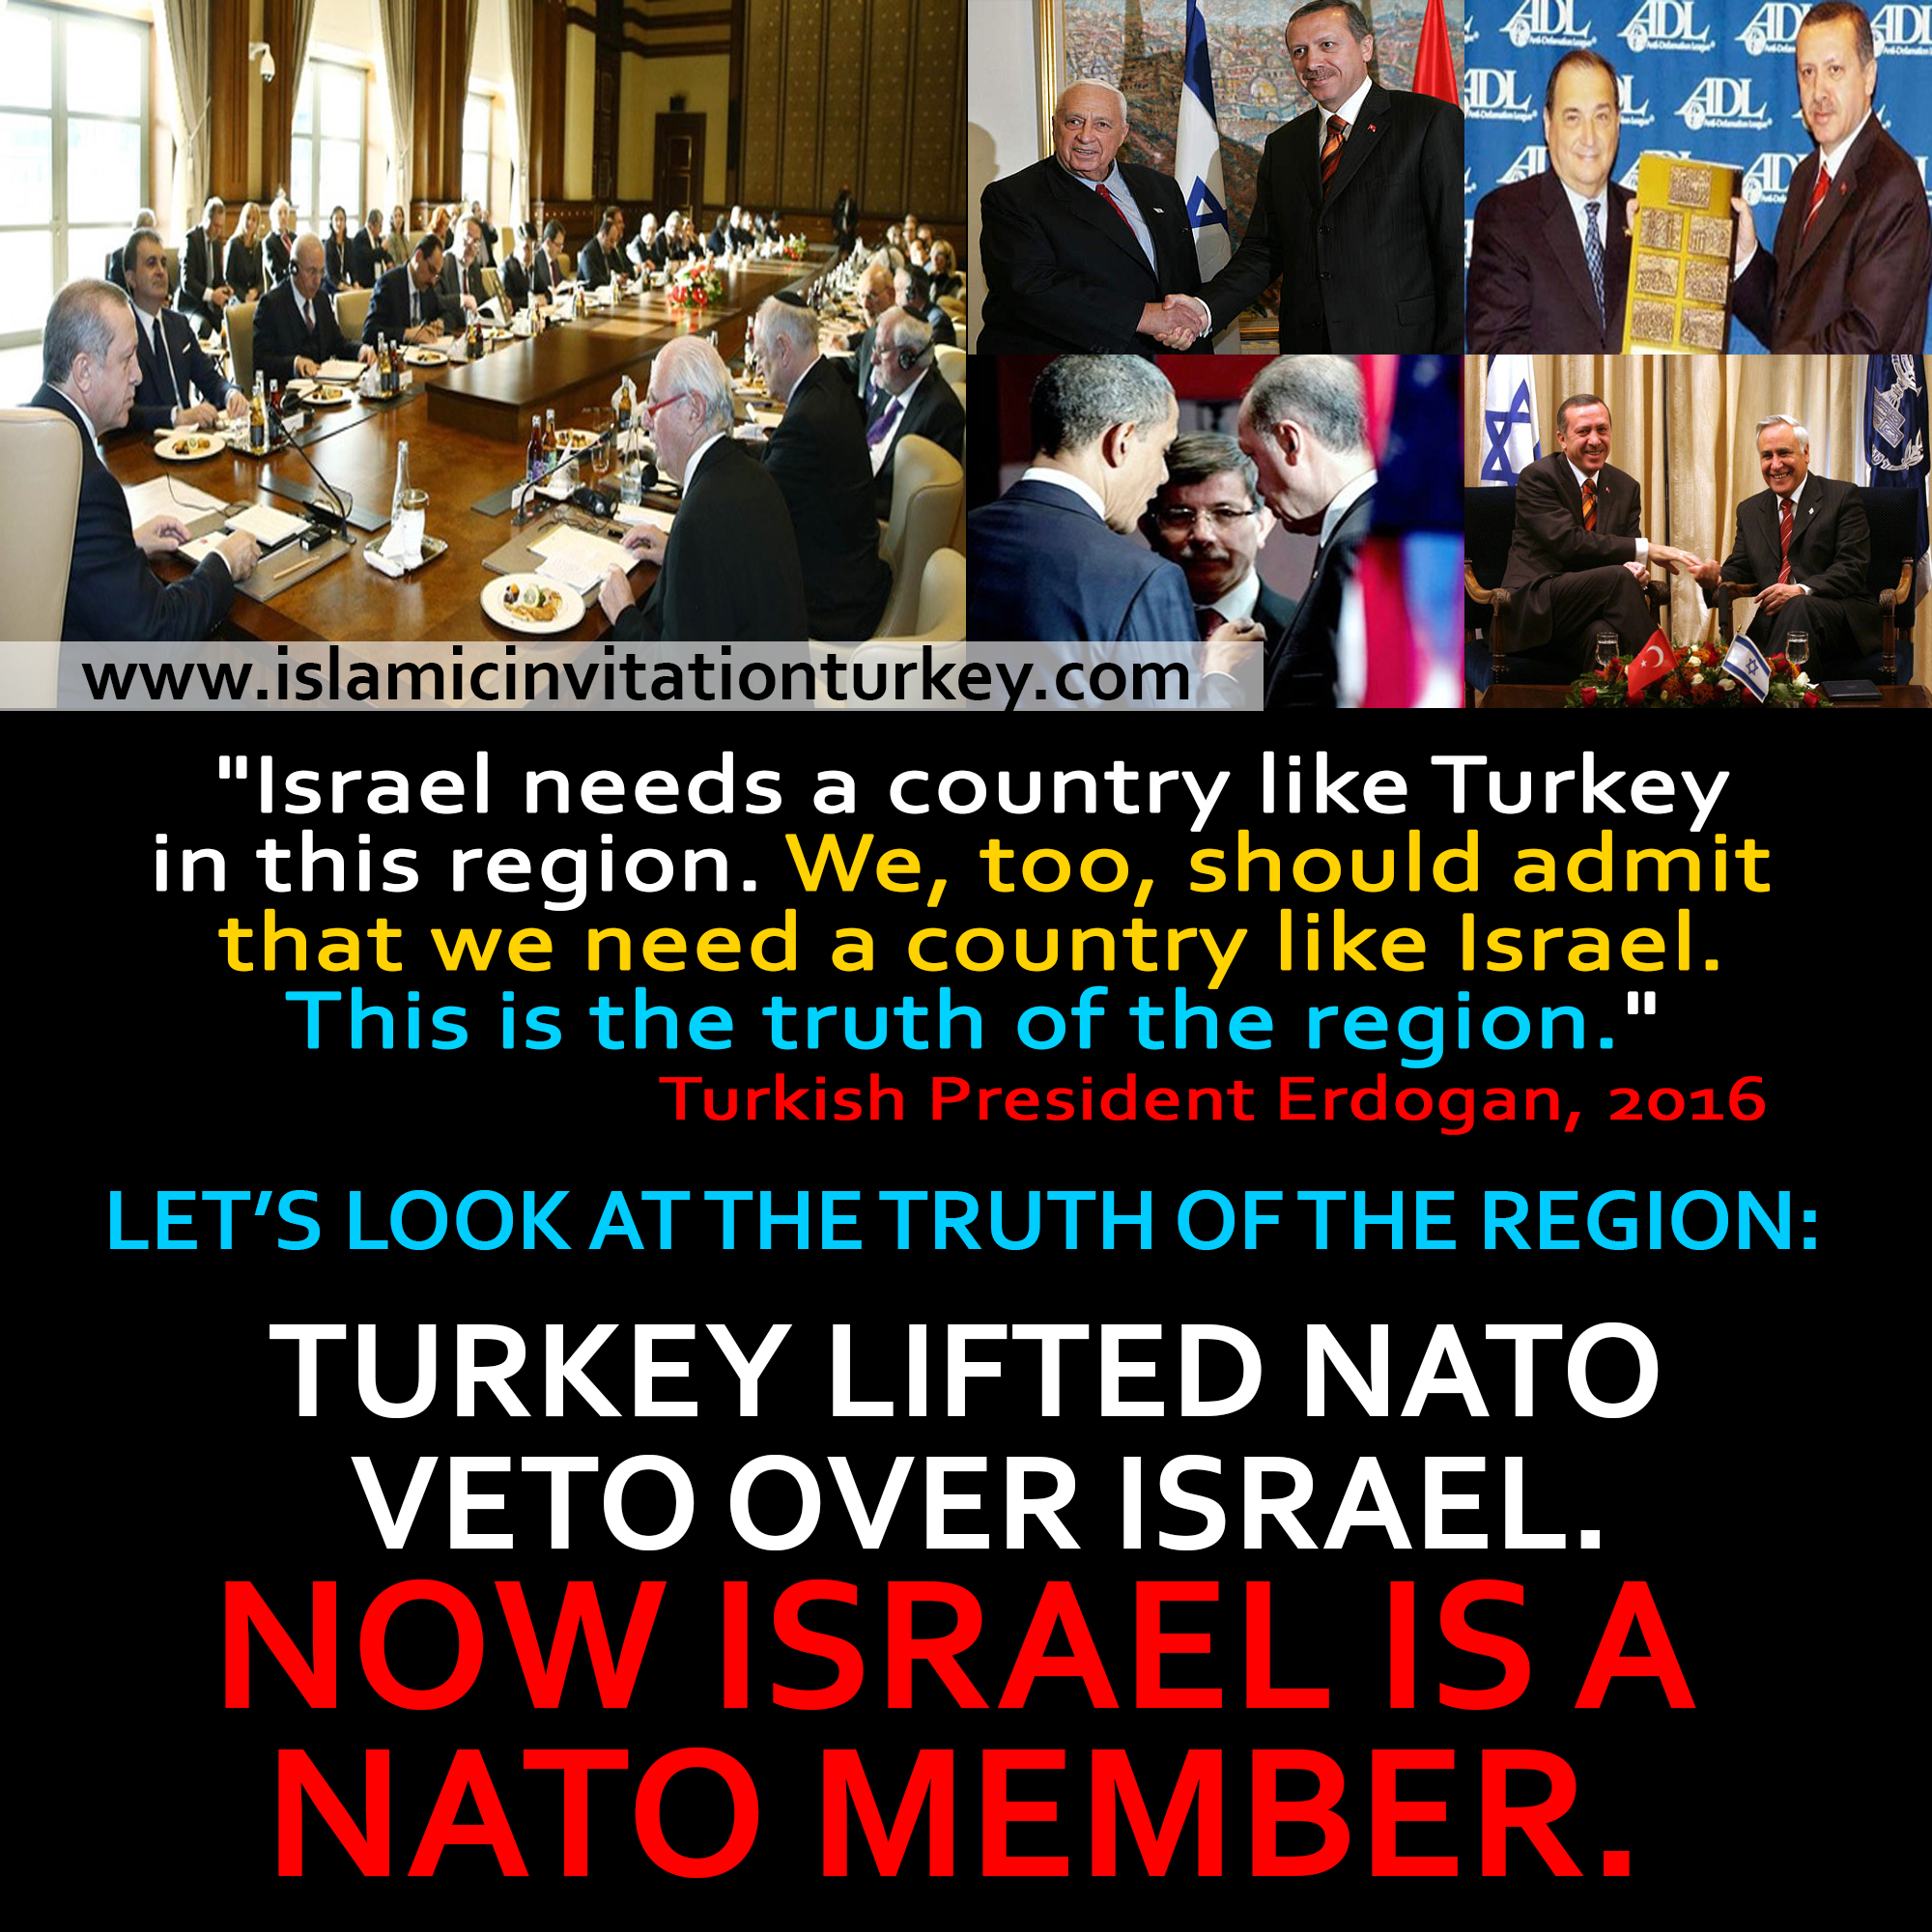 TURKEY LIFTED NATO VETO OVER ISRAEL